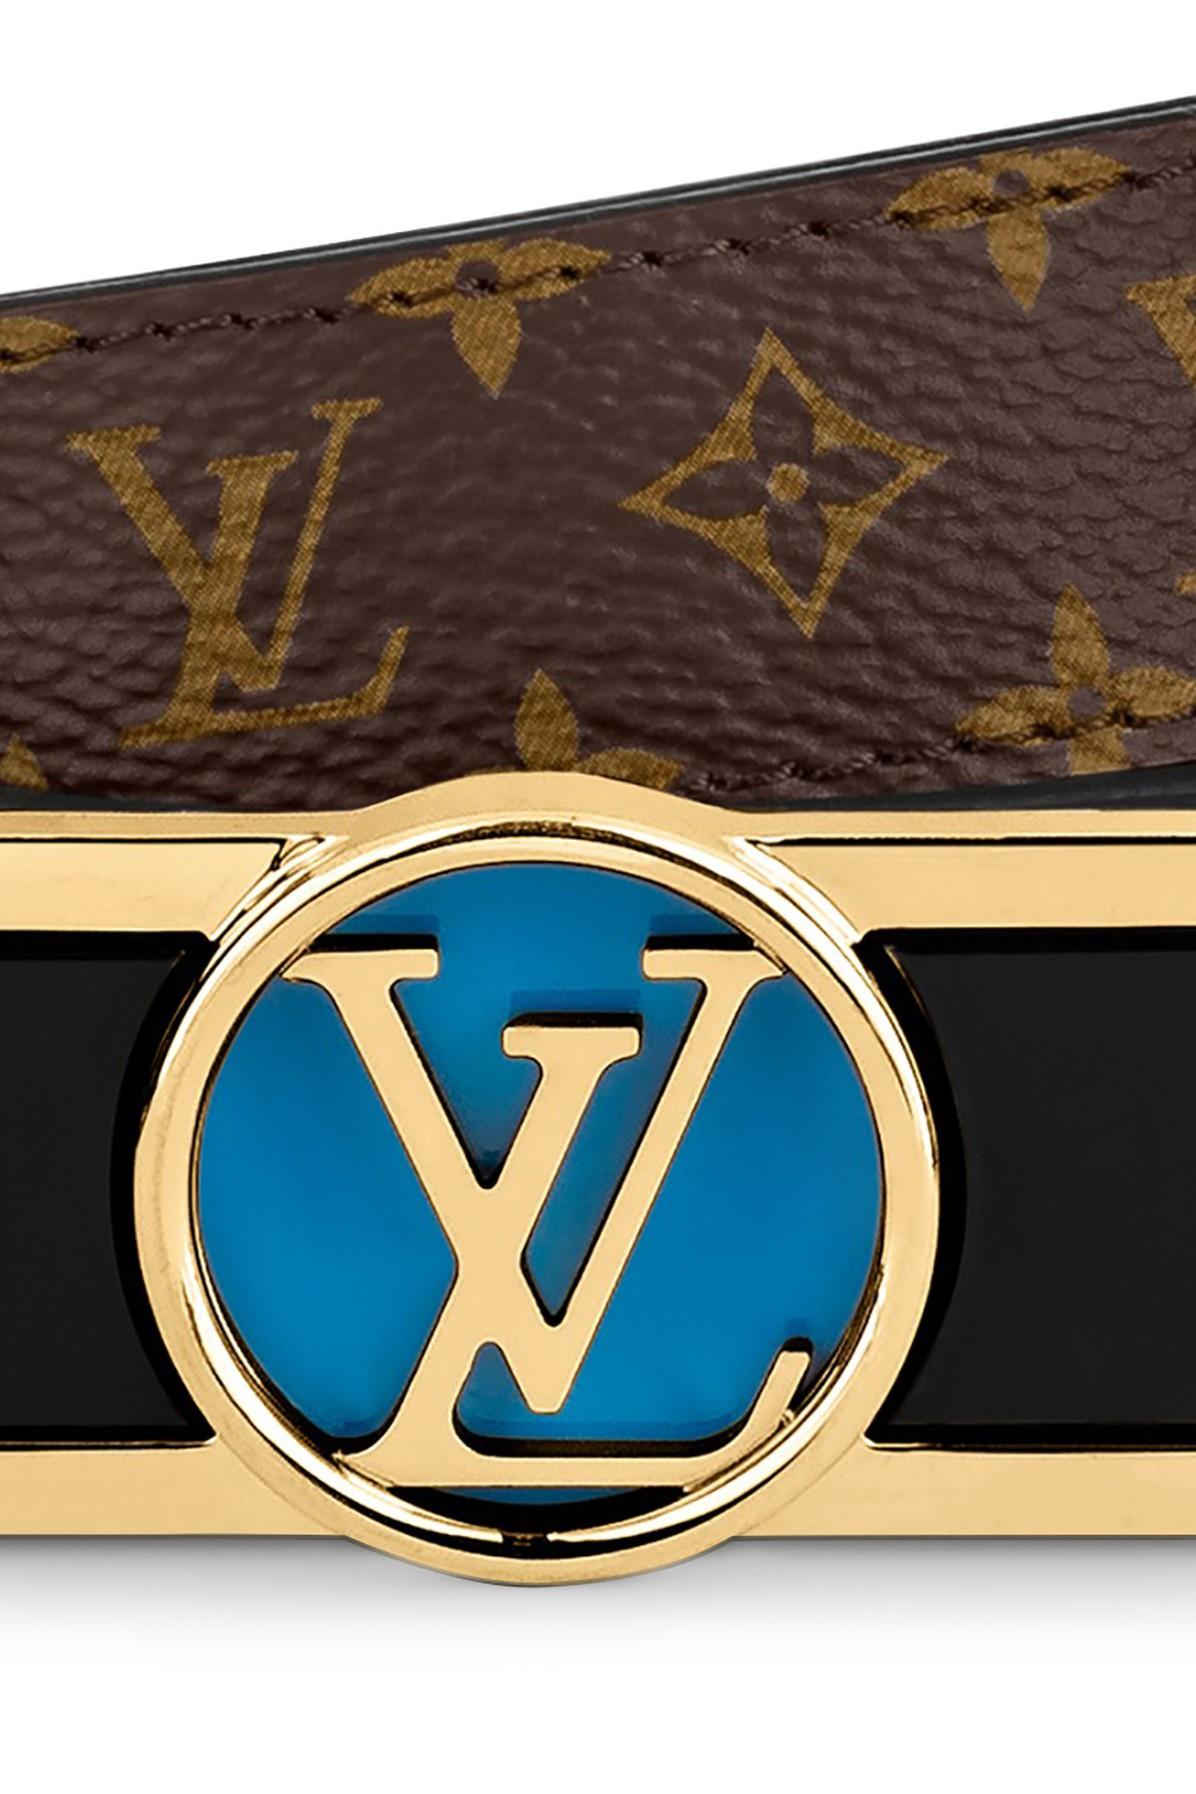 Louis Vuitton Dauphine Reversible Belt